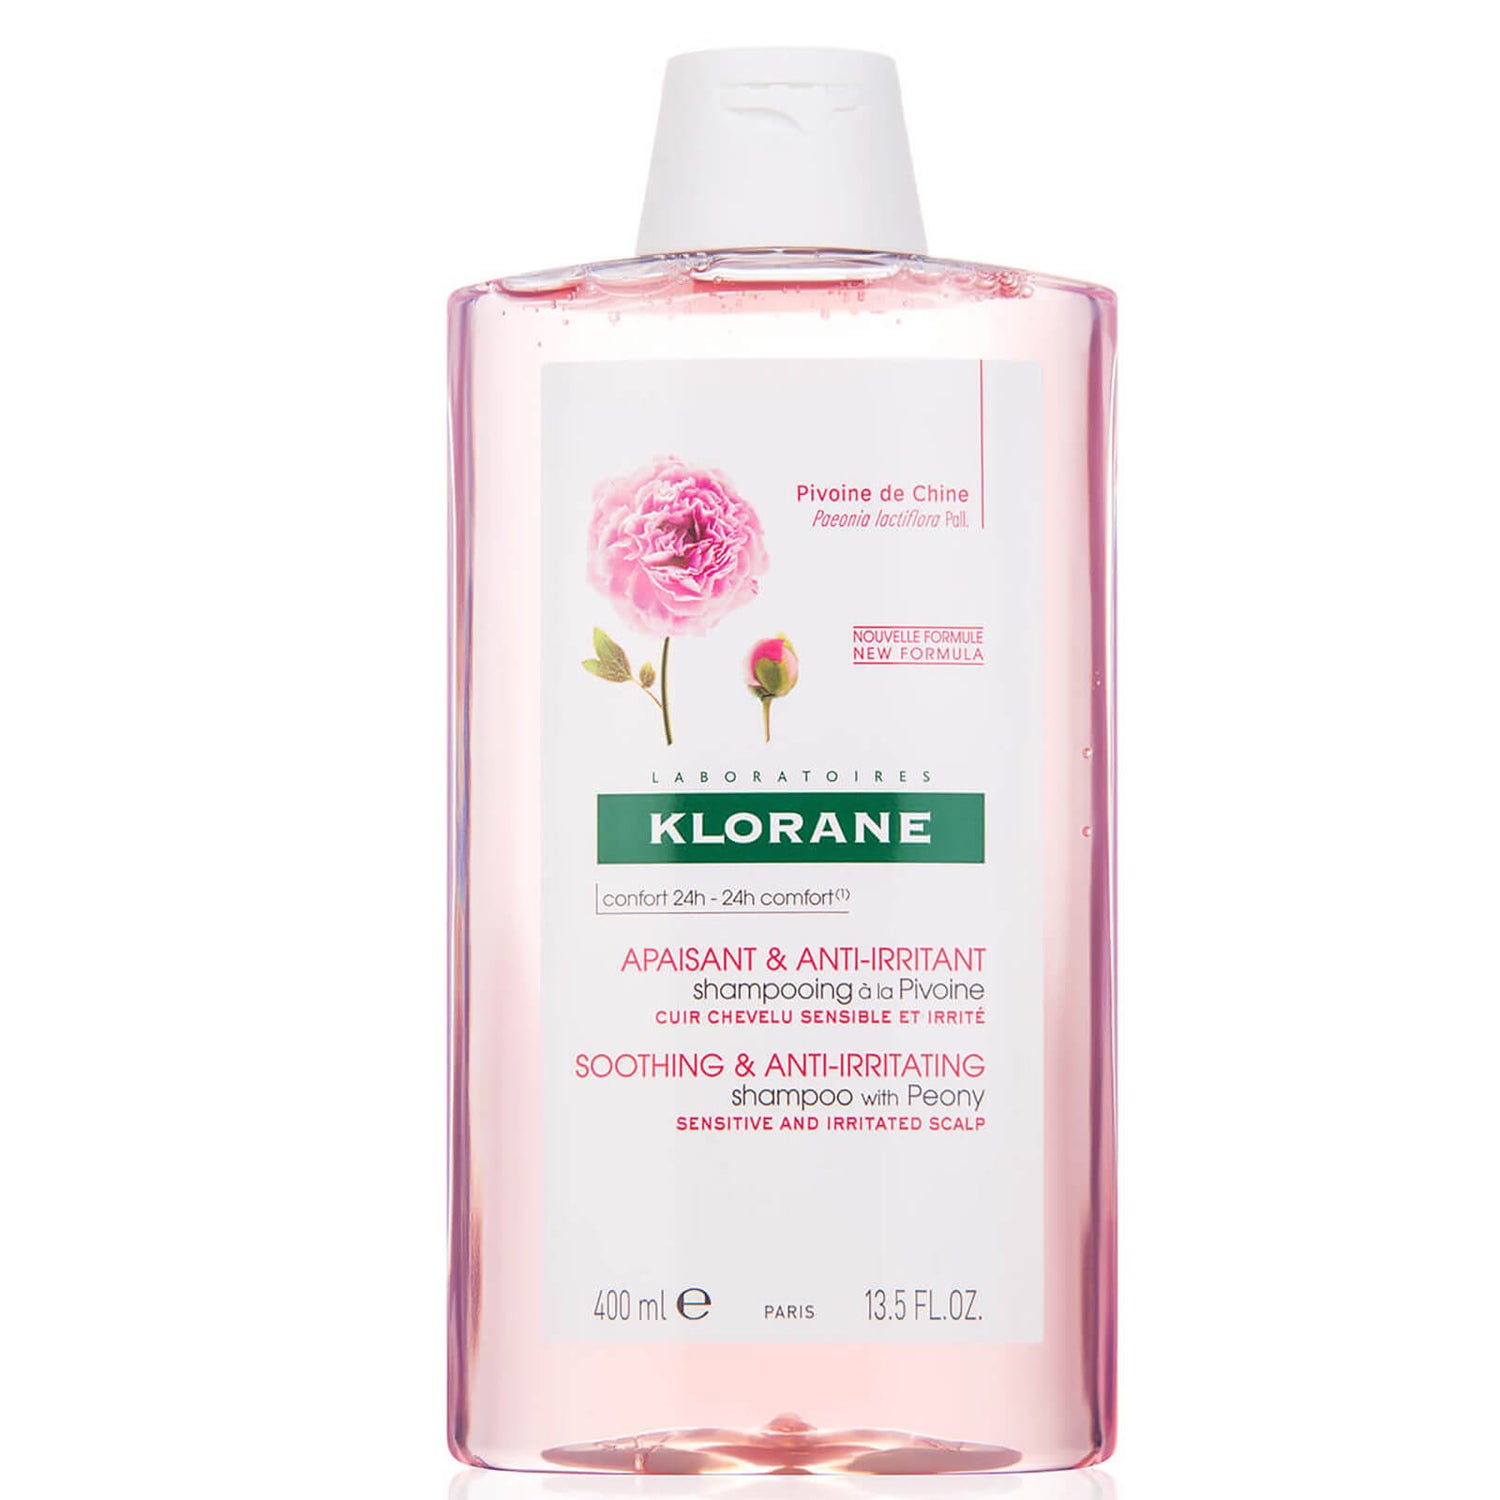 KLORANE Shampoo with Peony 400ml